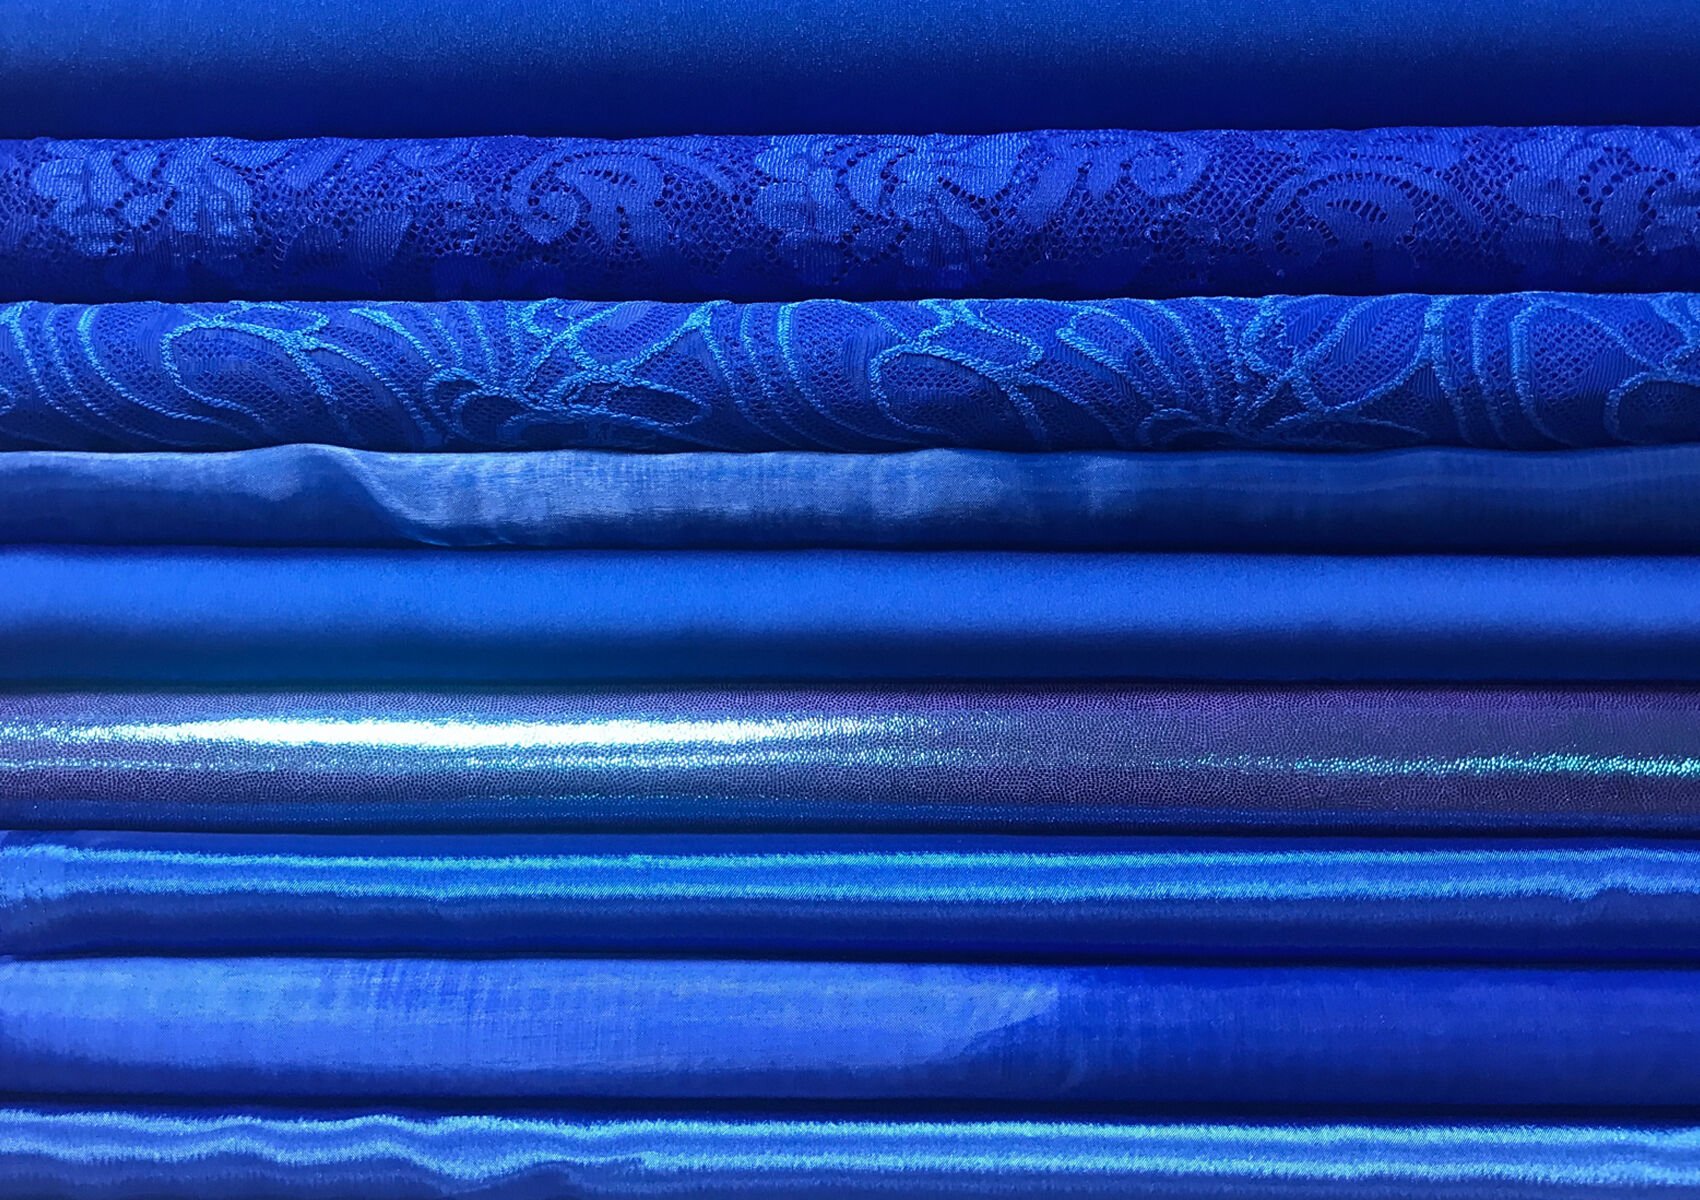 Browse cobalt colour fabric